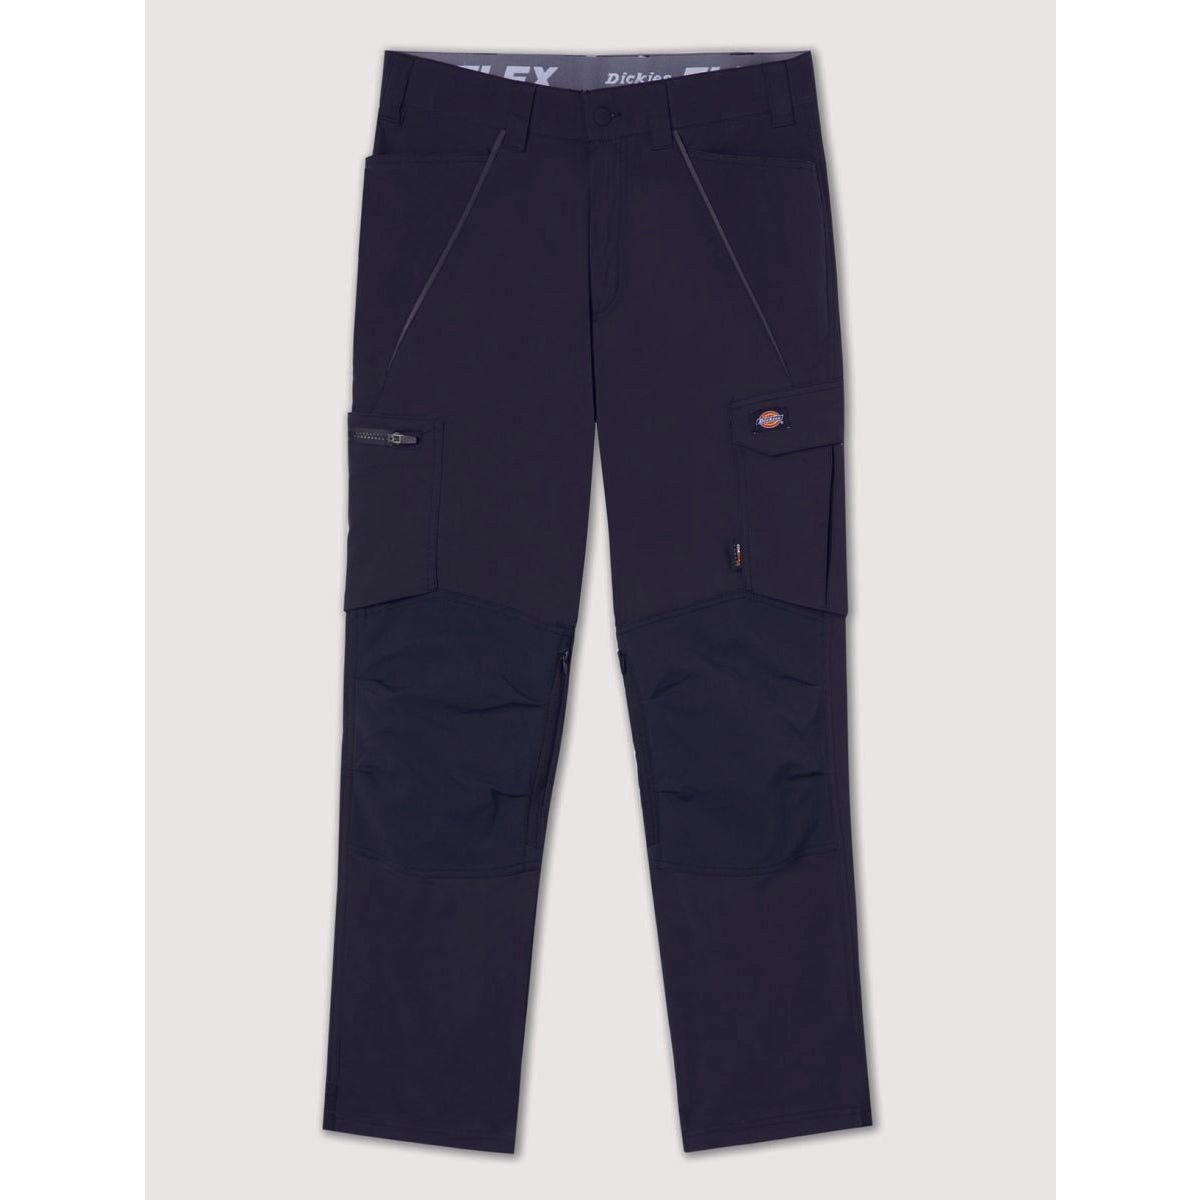 Pantalon léger Flex Noir - Dickies - Taille 48 5